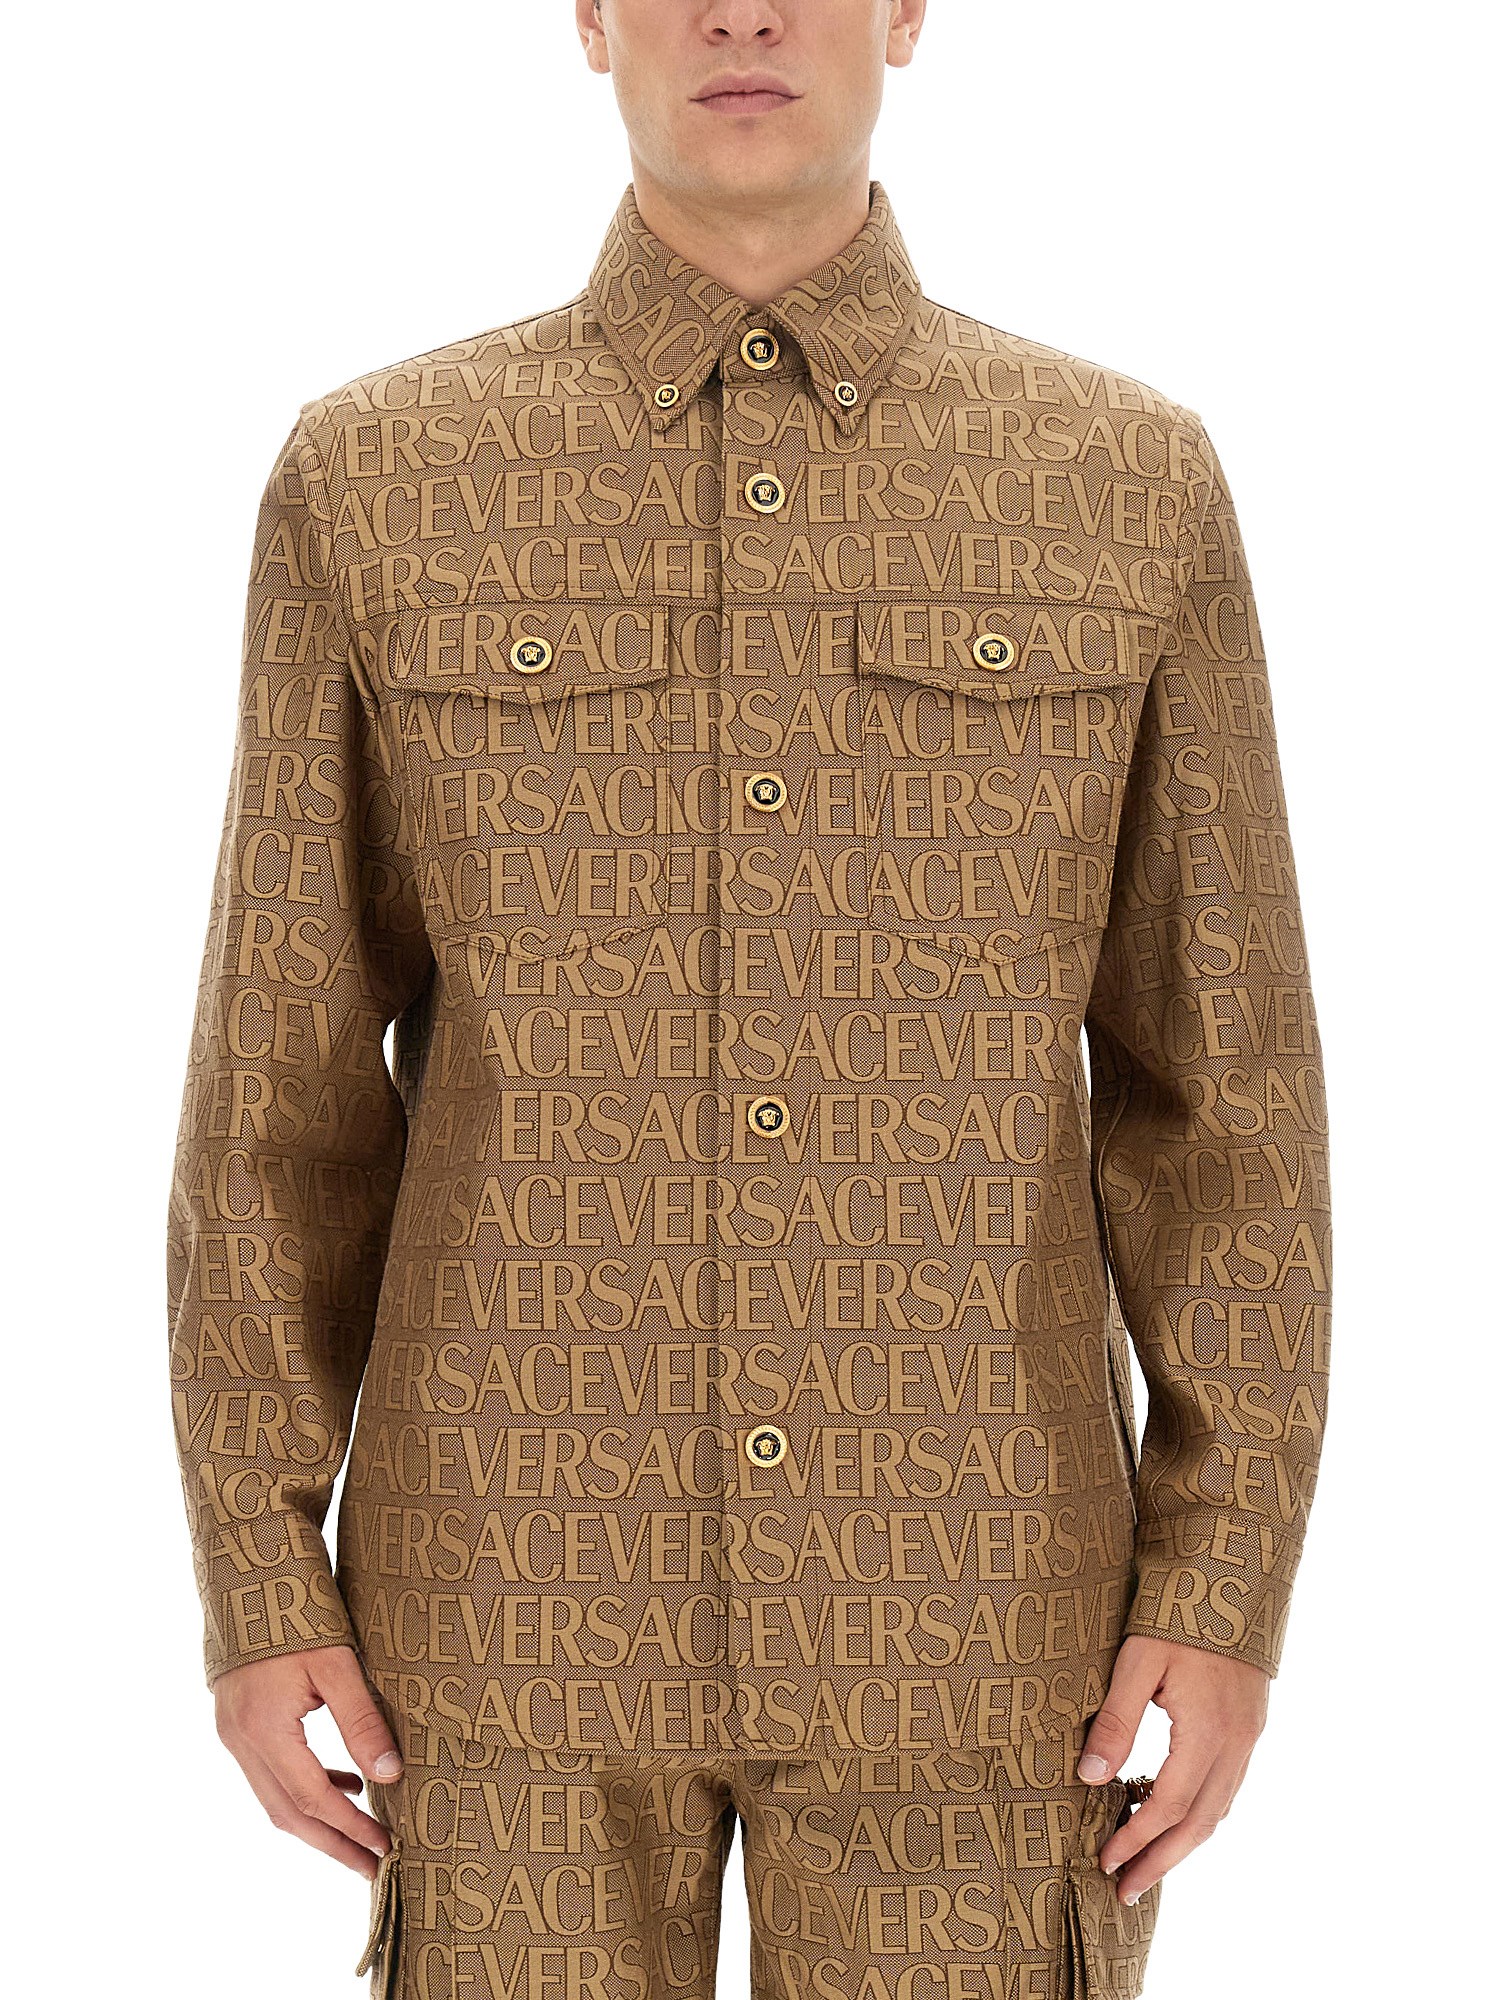 Versace versace allover logo shirt